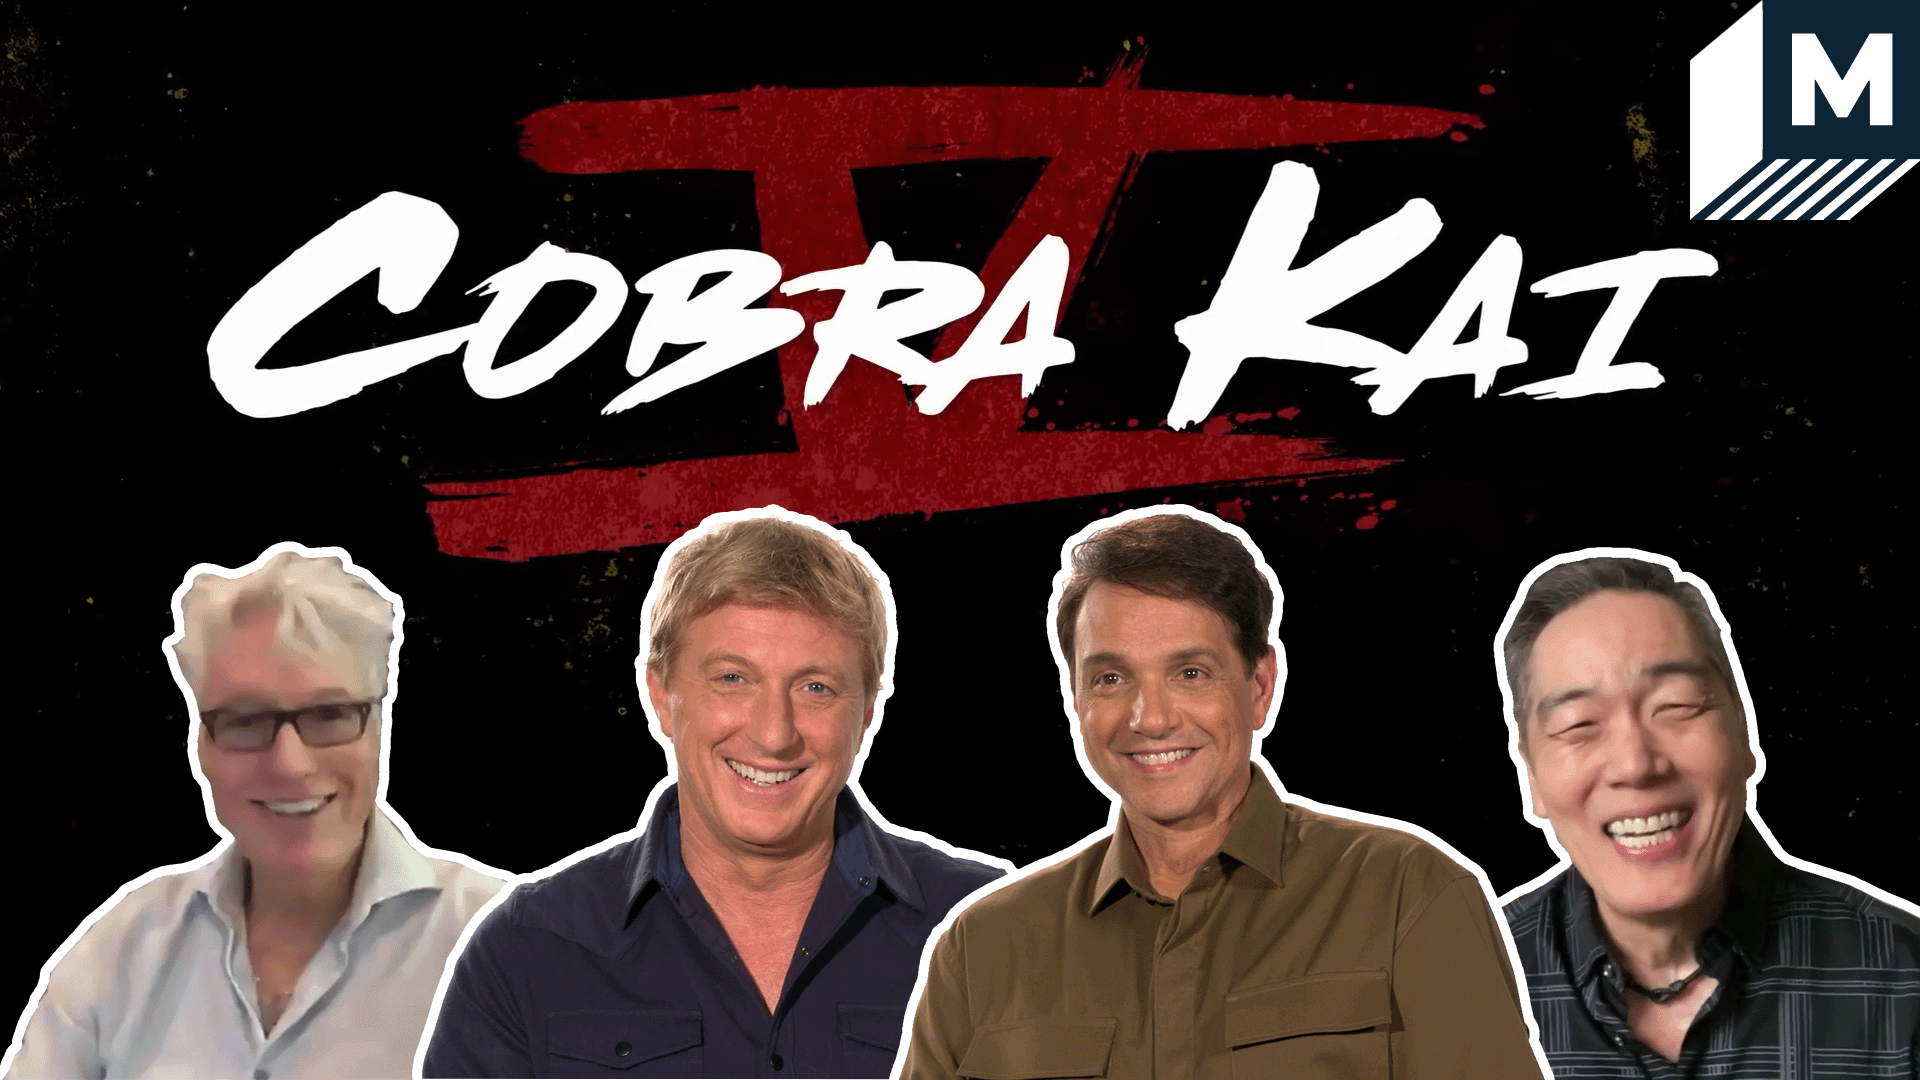 Cobra Kai:  All you need to know before watching Season 5